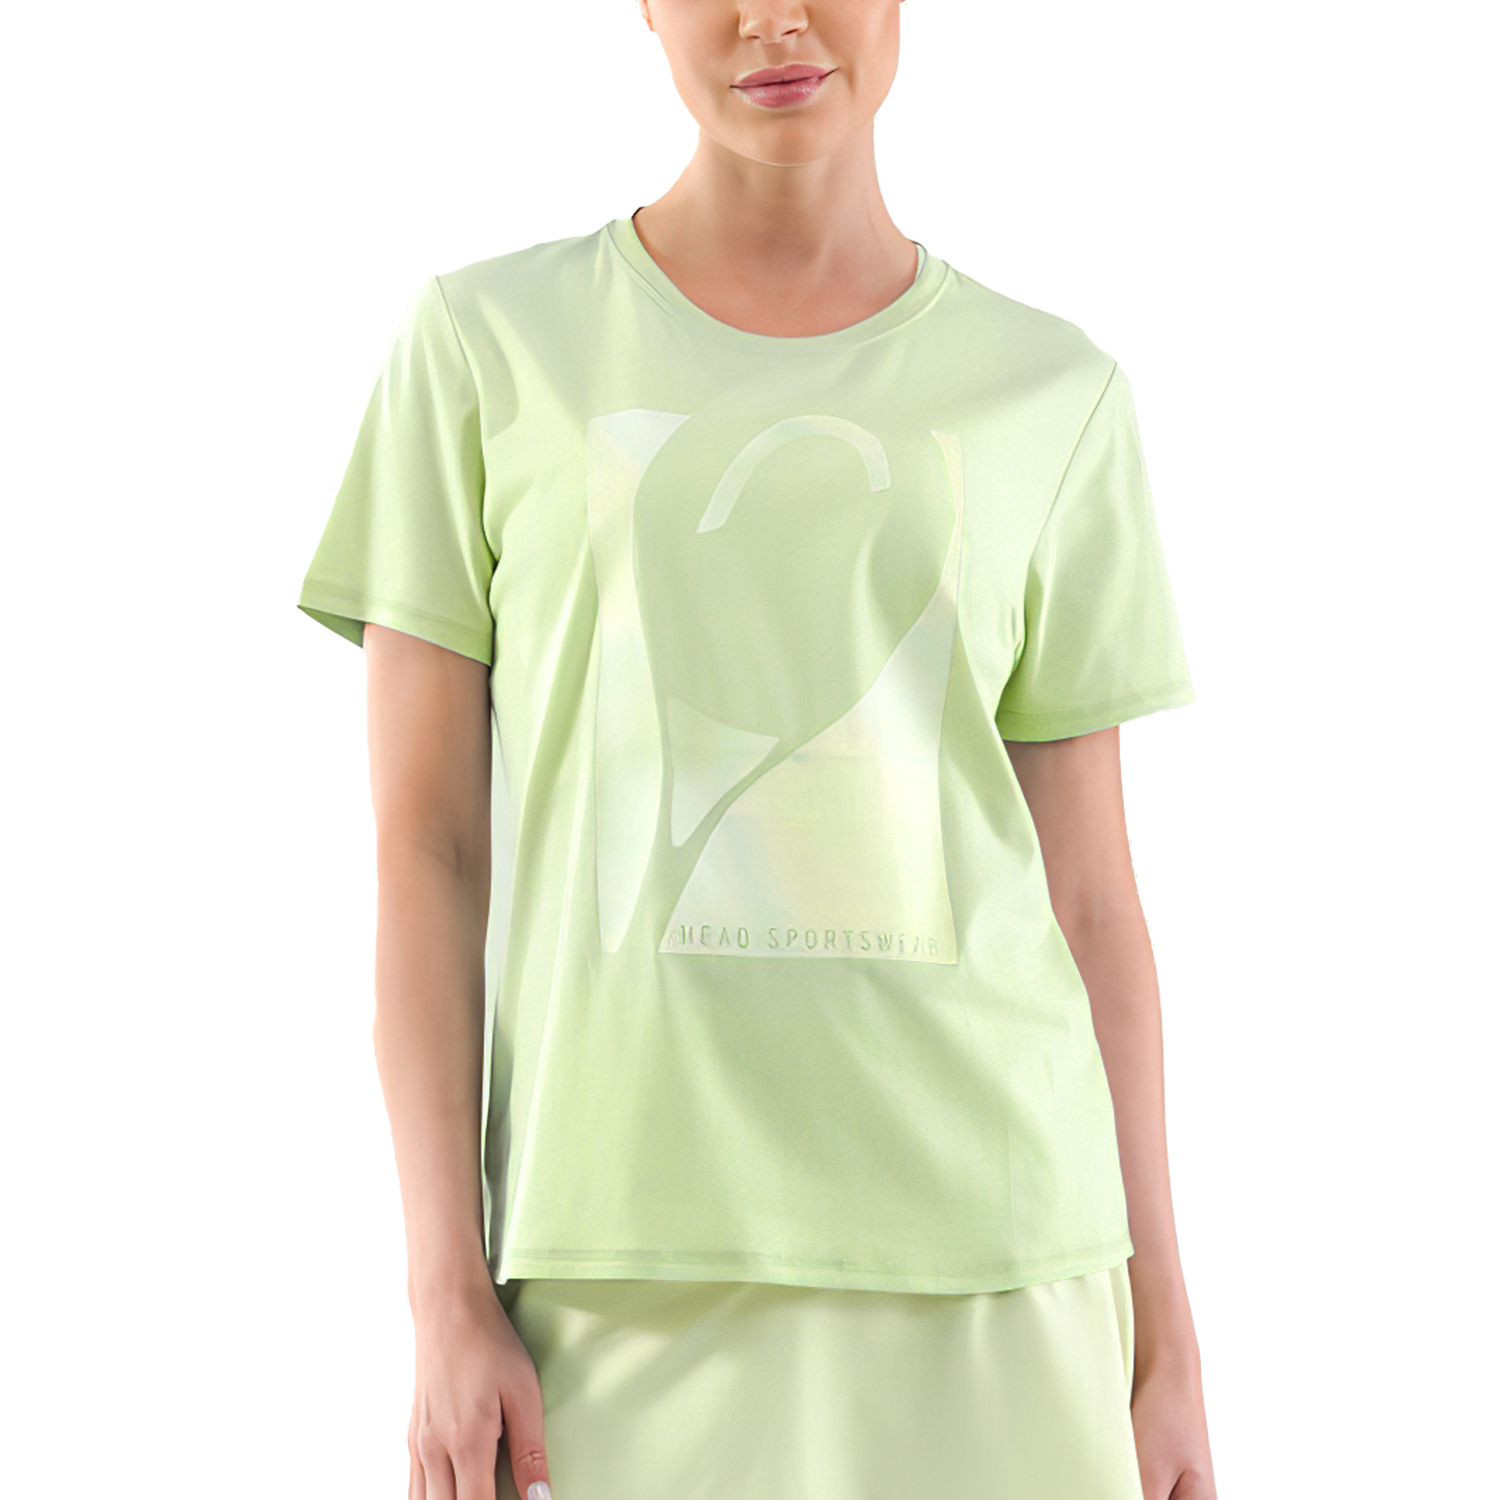 Head Vision T-Shirt - Lightgreen